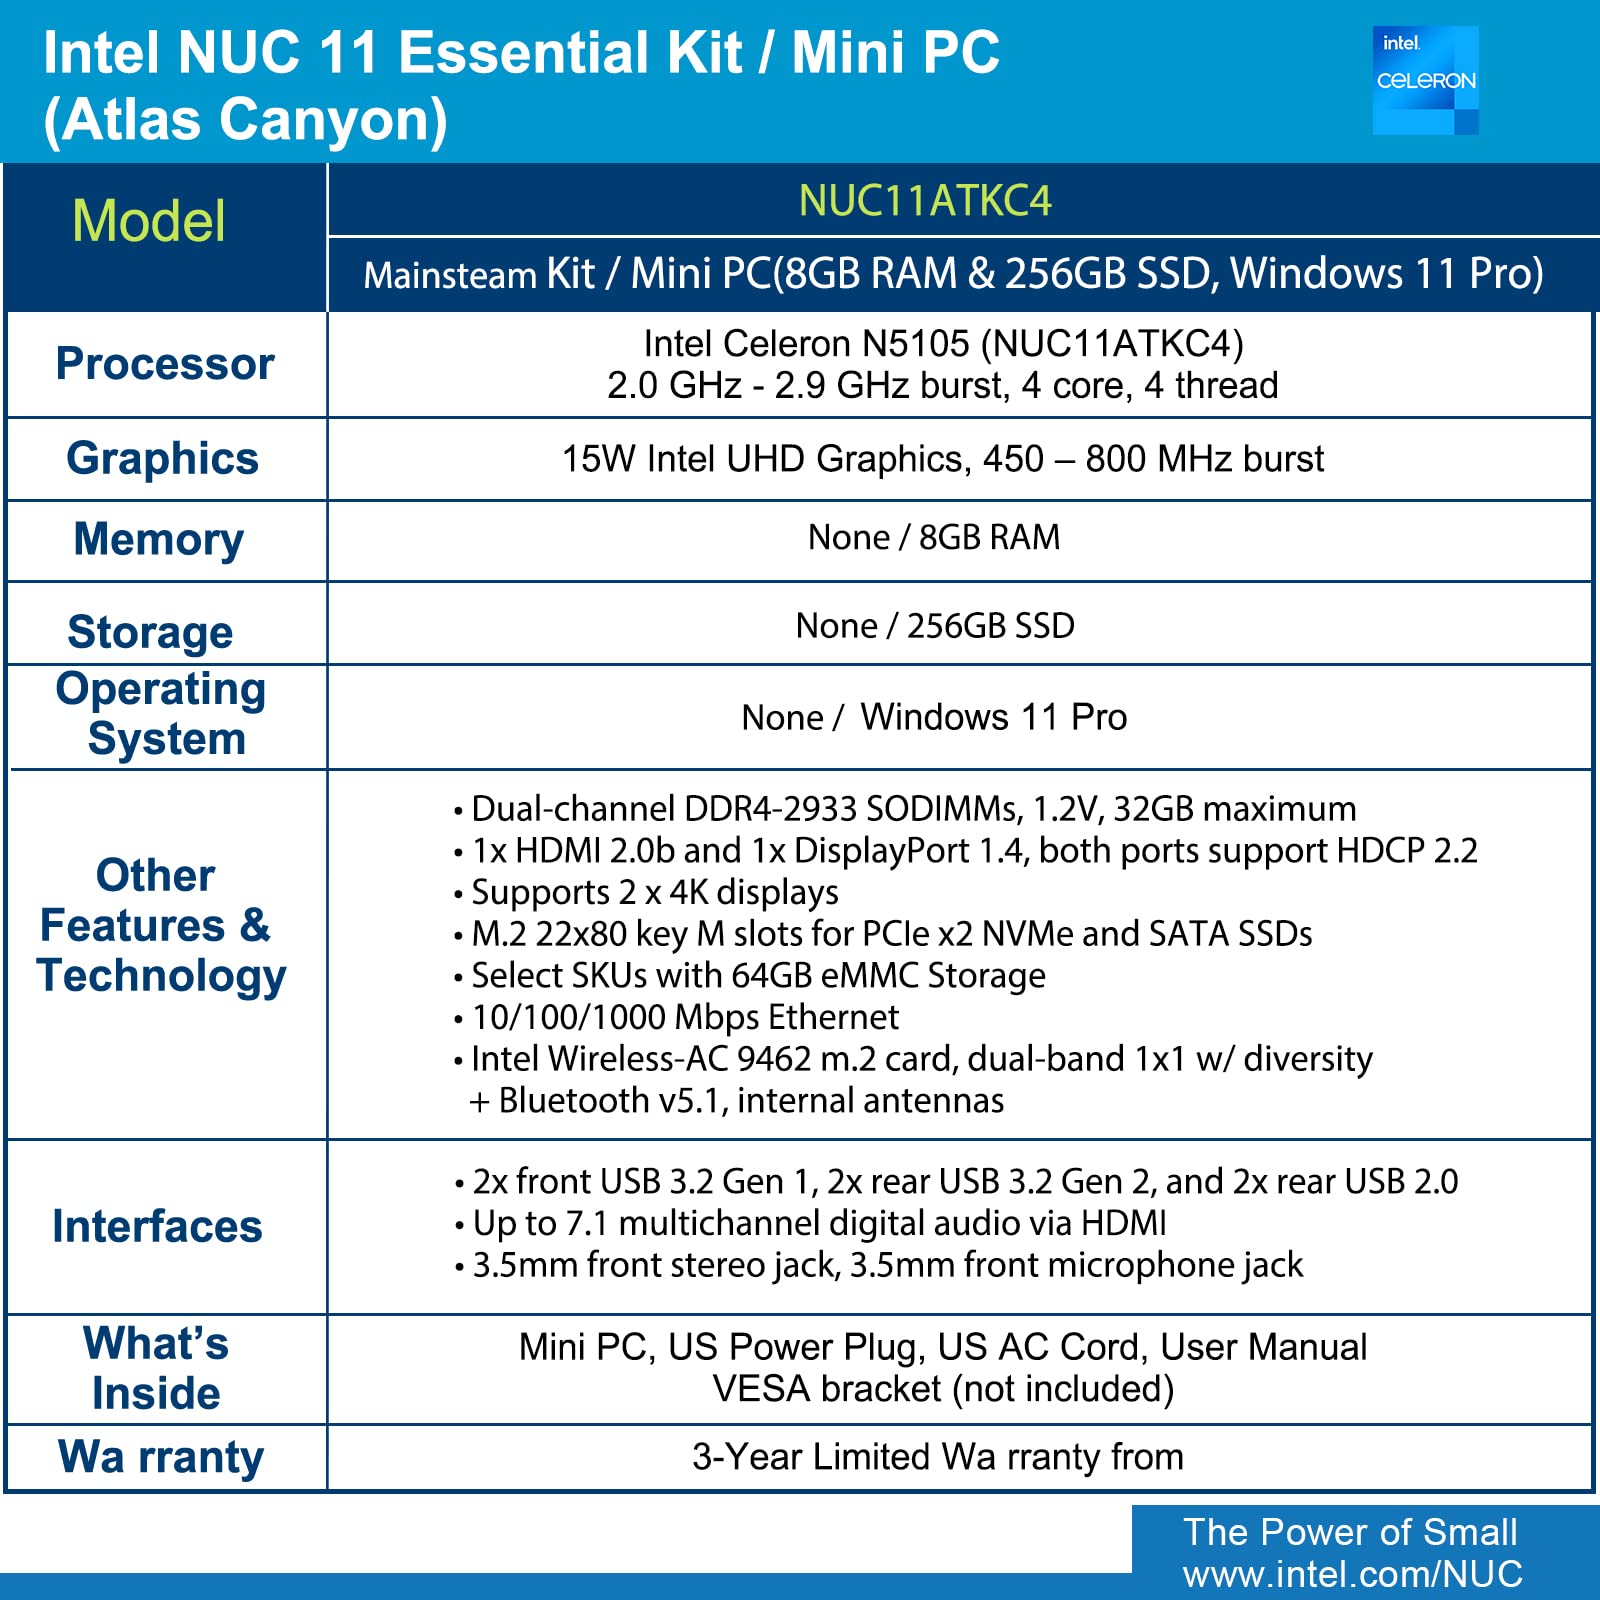 Intel Nuc 11 NUC11ATKC4 Atlas Canyon Mini pc,Intel Celeron N5105, 2.0 GHz - 2.9 GHz Burst, 4 core, 4 Thread, 15W Intel UHD Graphics, 450 – 800 MHz Burst, 8GB RAM, 256GB SSD, Windows 11 Pro